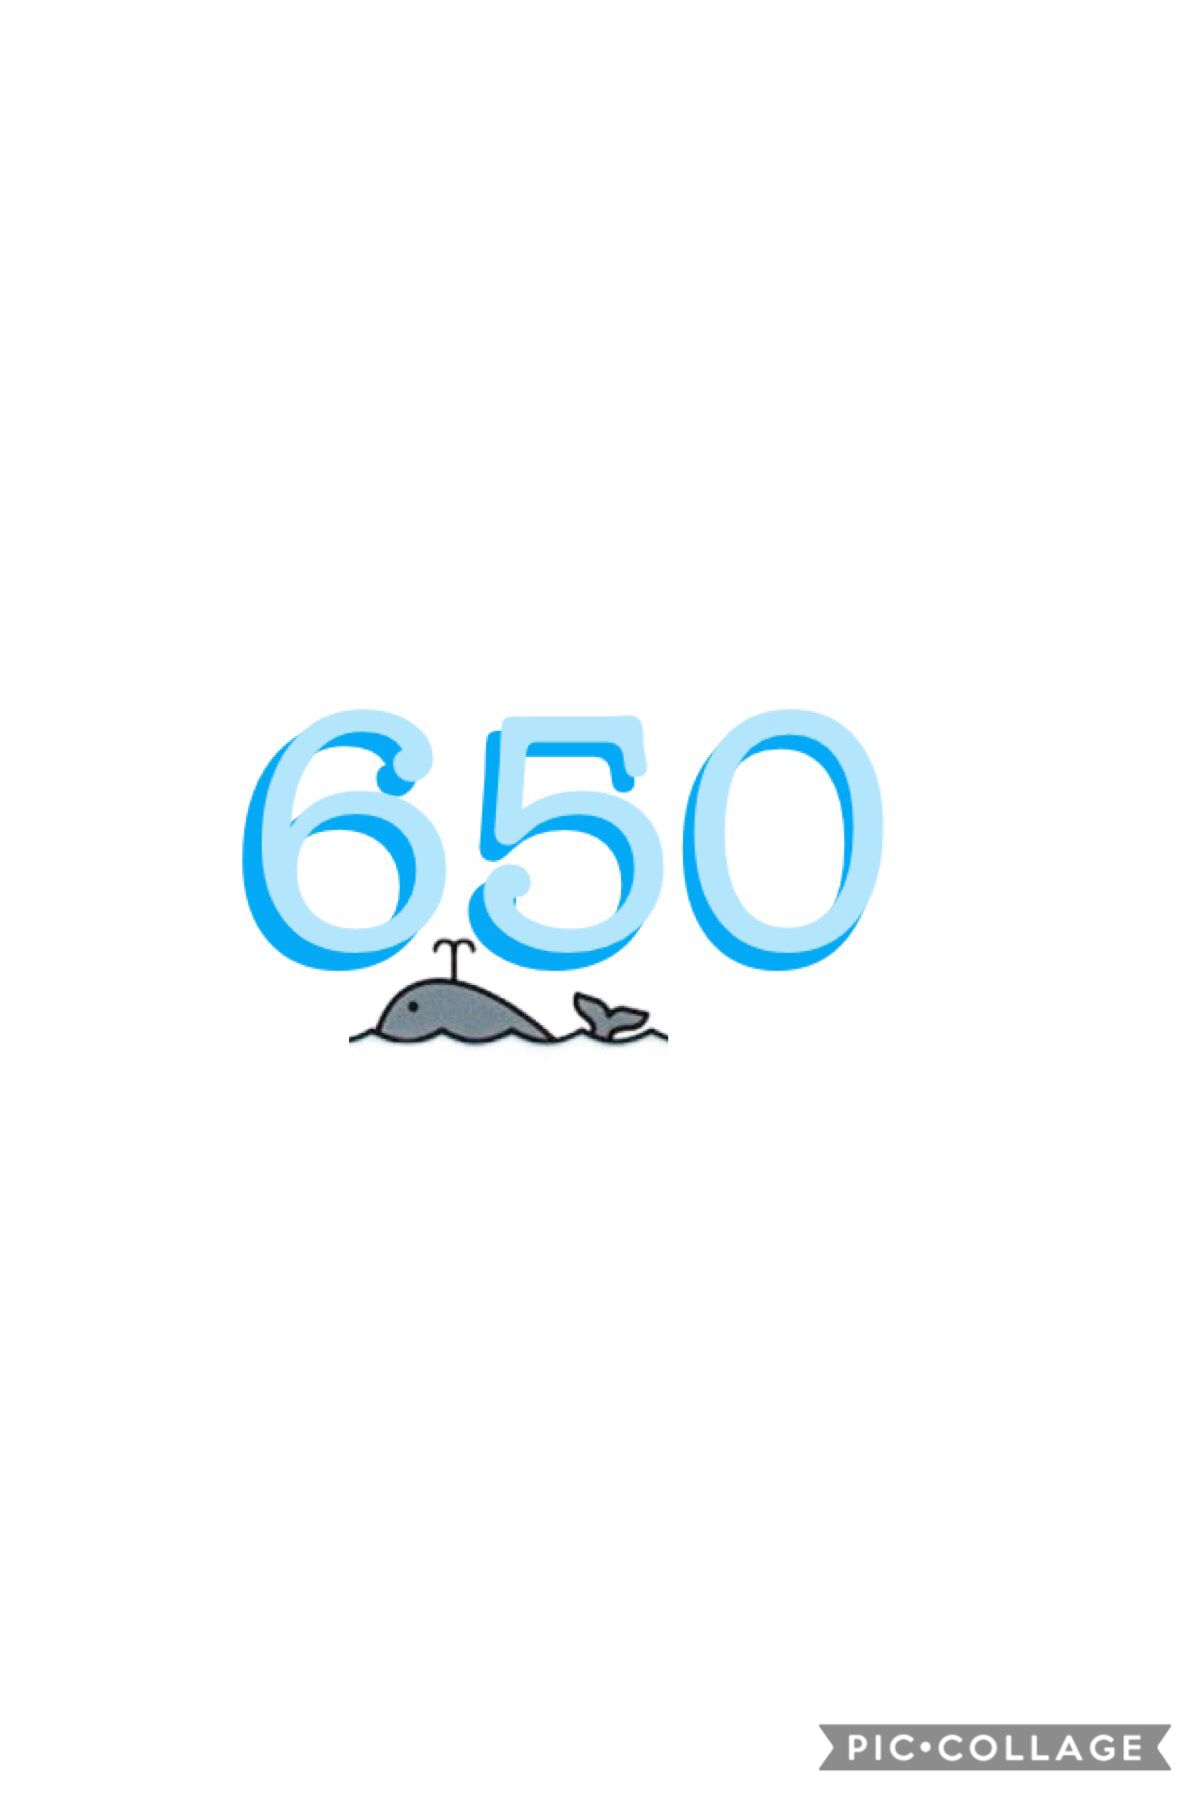 650 followers?! 😱